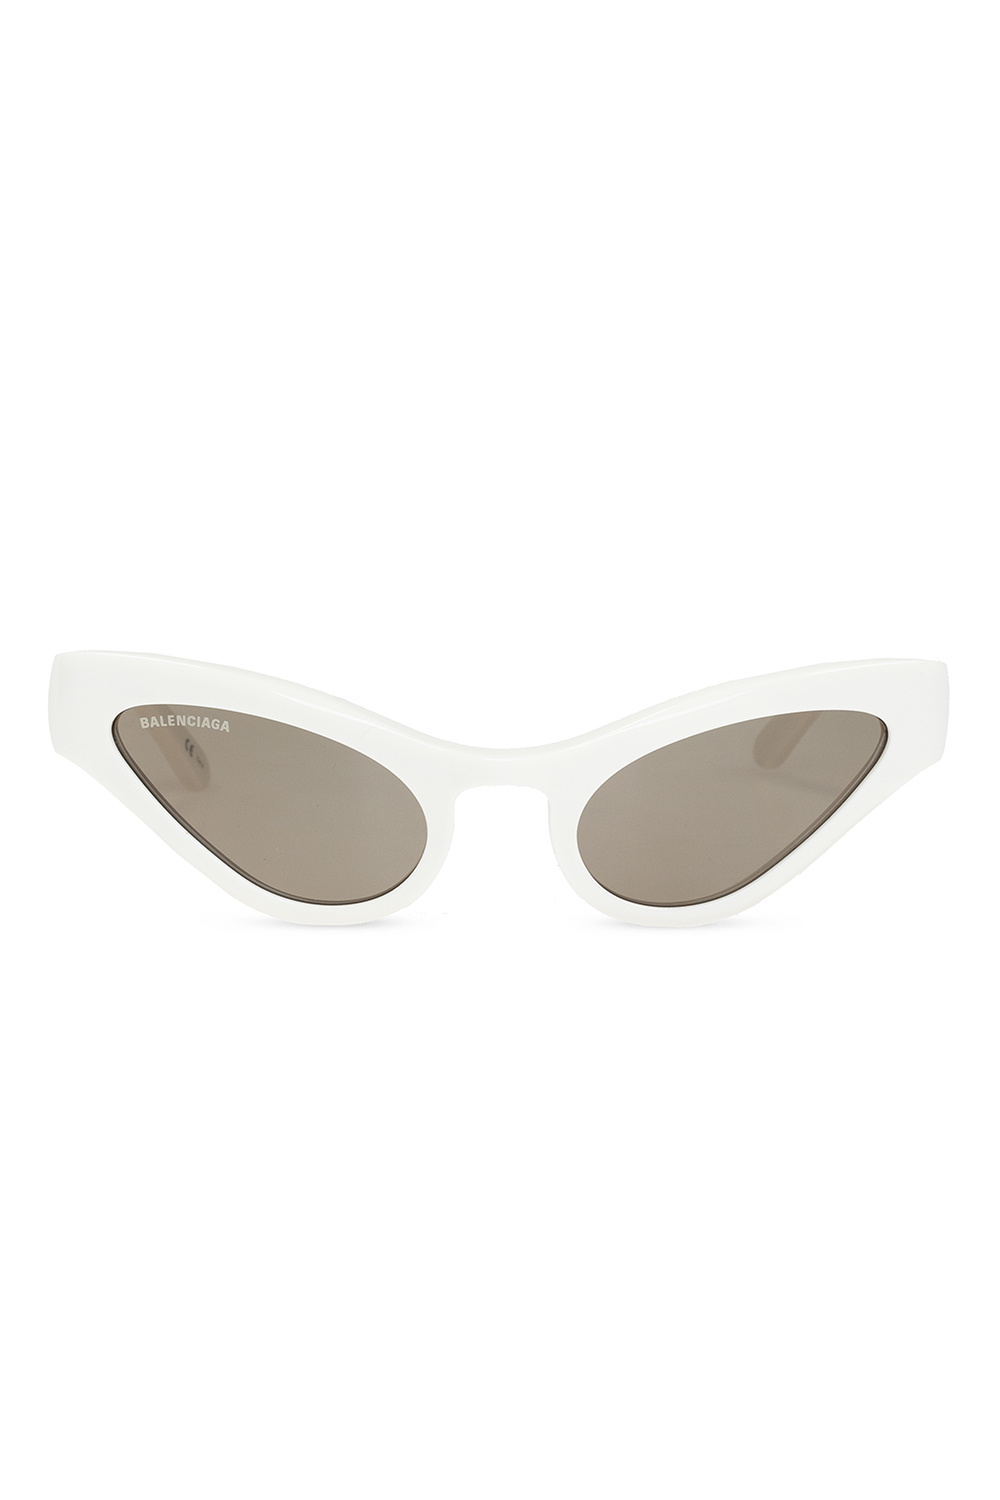 Balenciaga Teresa square-frame sunglasses